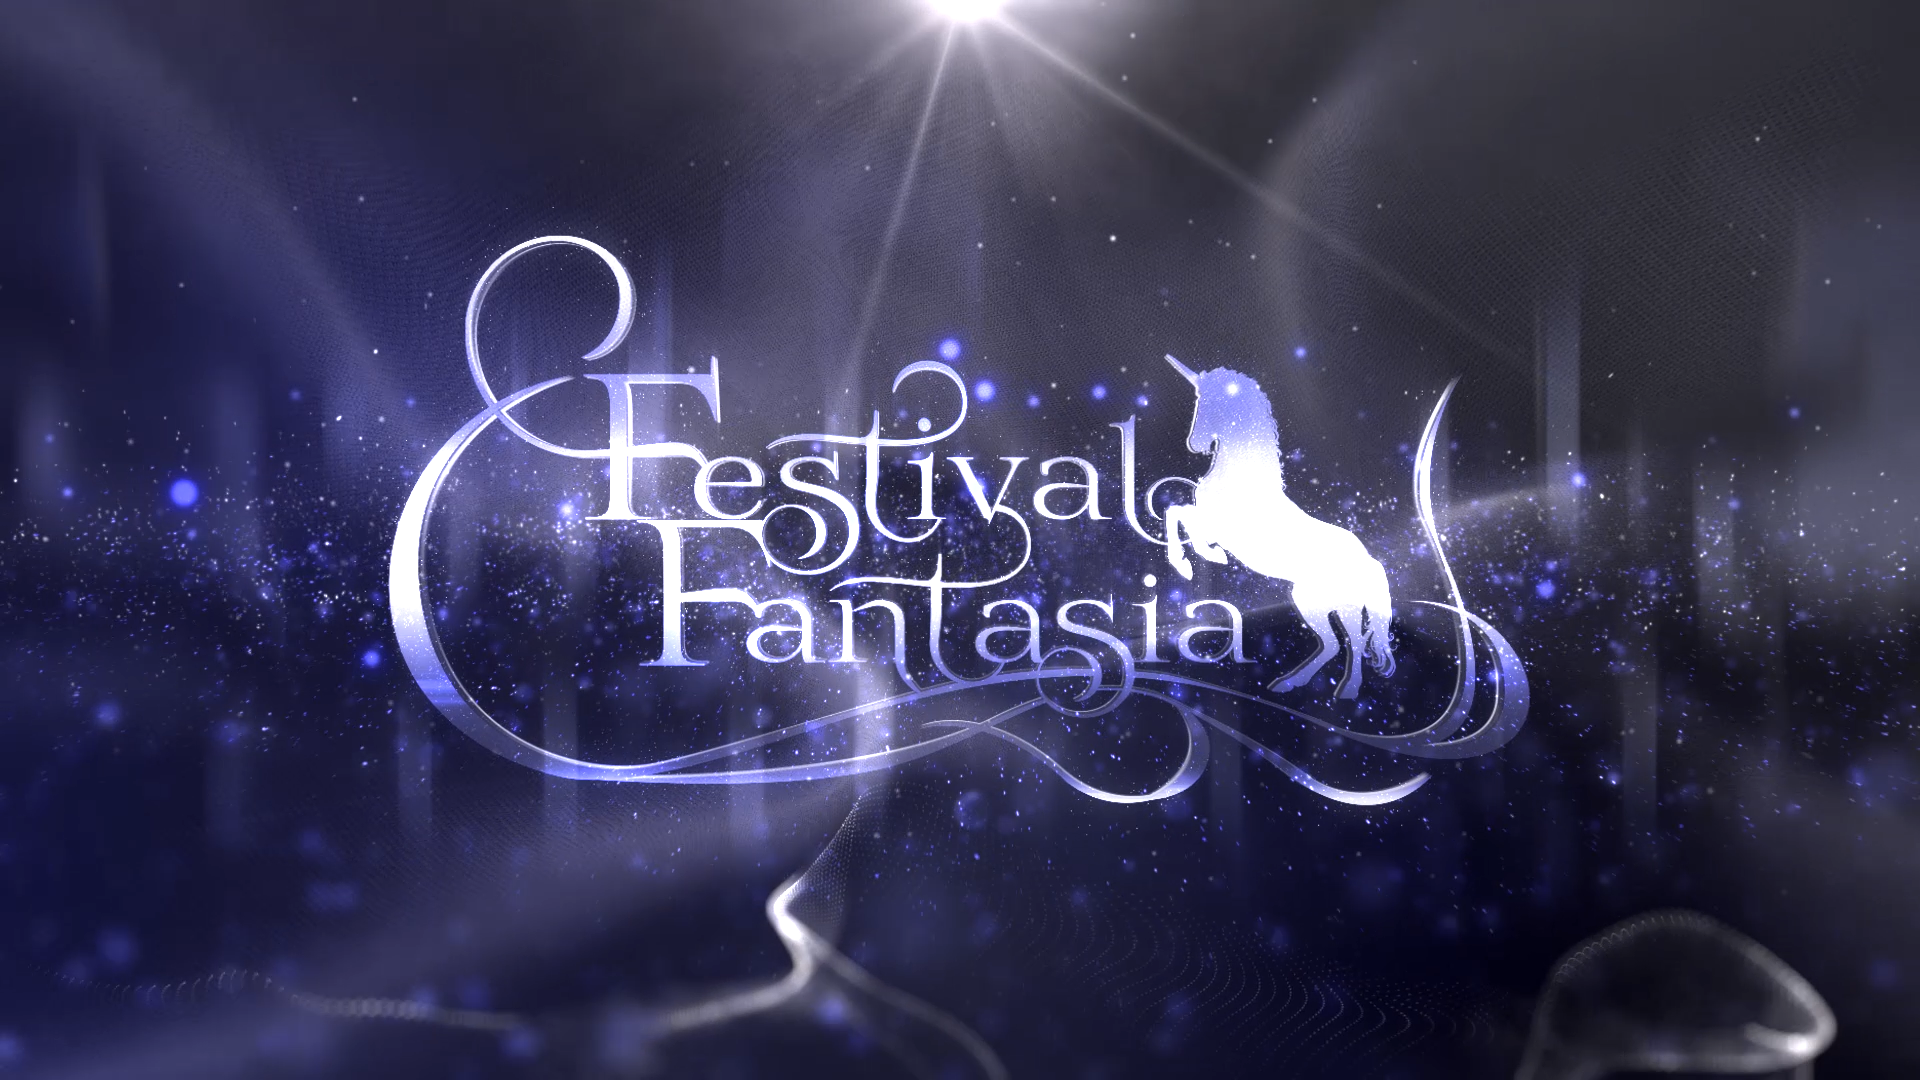 (c) Festival-fantasia.de